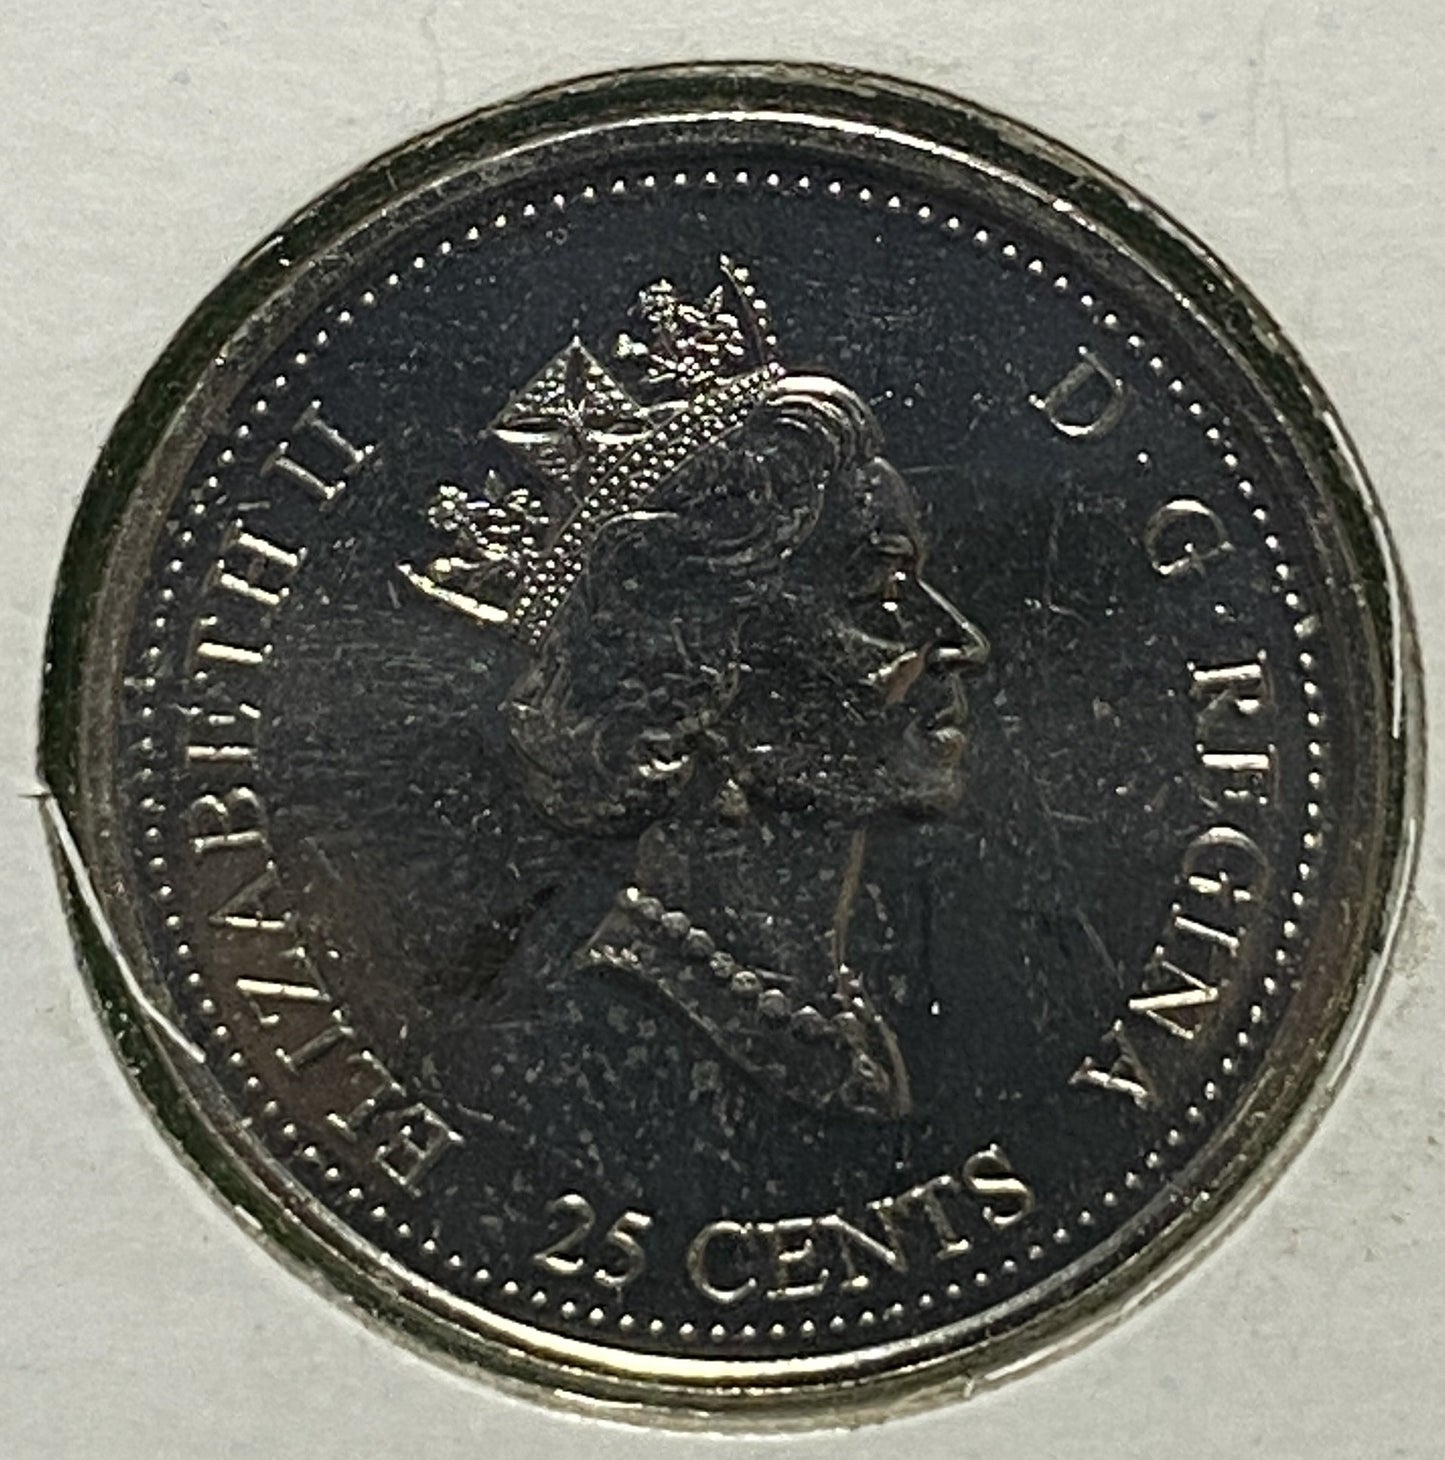 CANADIAN 1999 MILLENNIUM FEBRUARY Queen Elizabeth II  25 CENTS QUARTER COIN AU / UNC CONDITION